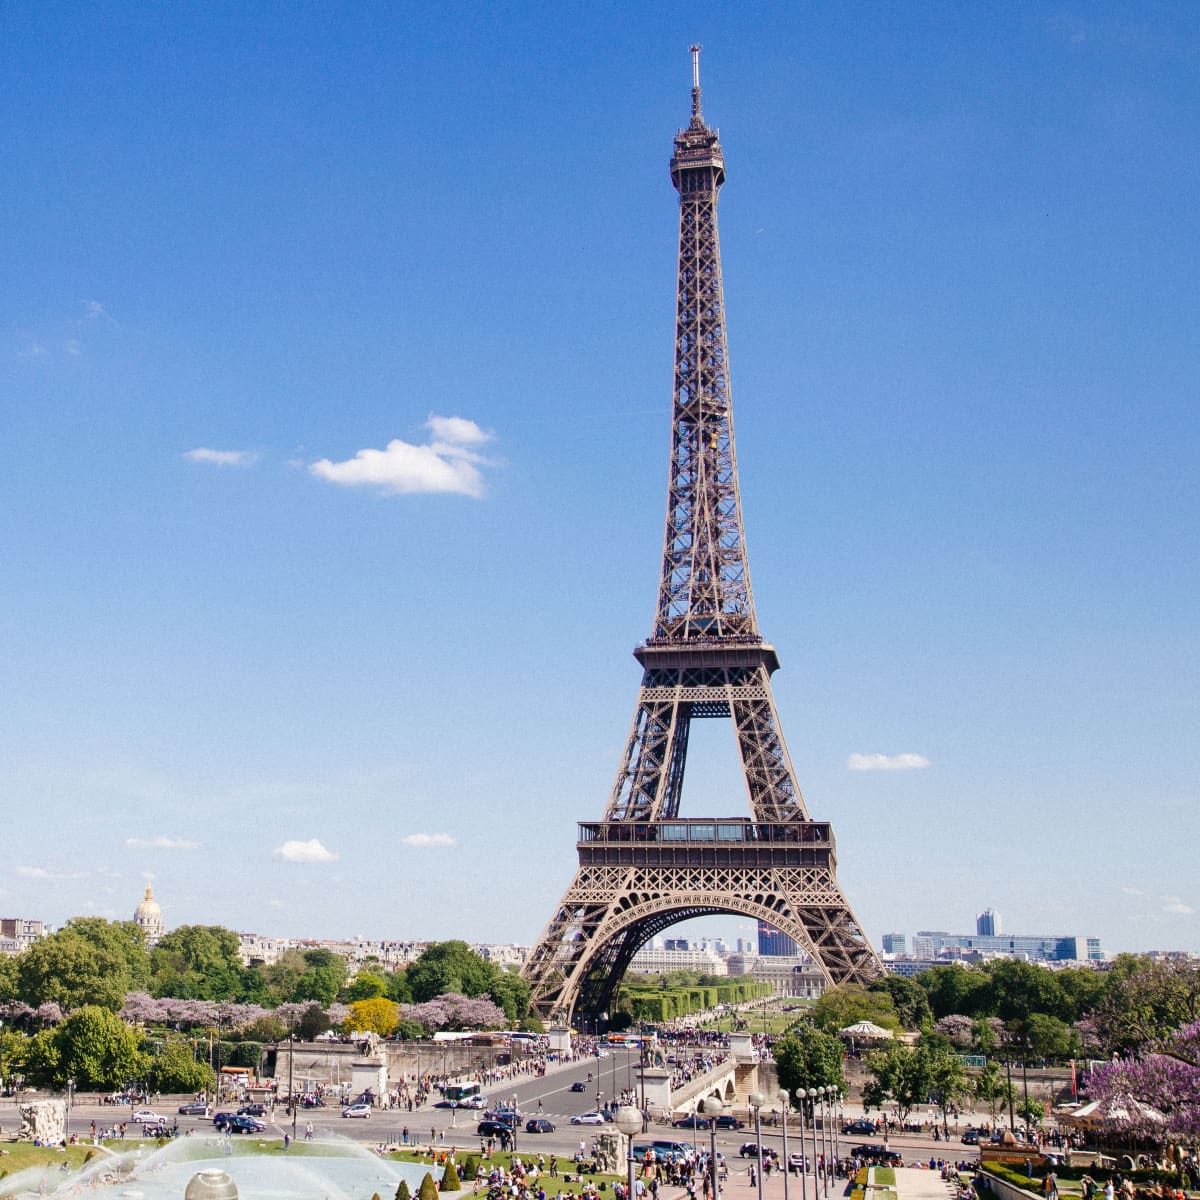 Tourists flock back to France over summer after pandemic slump